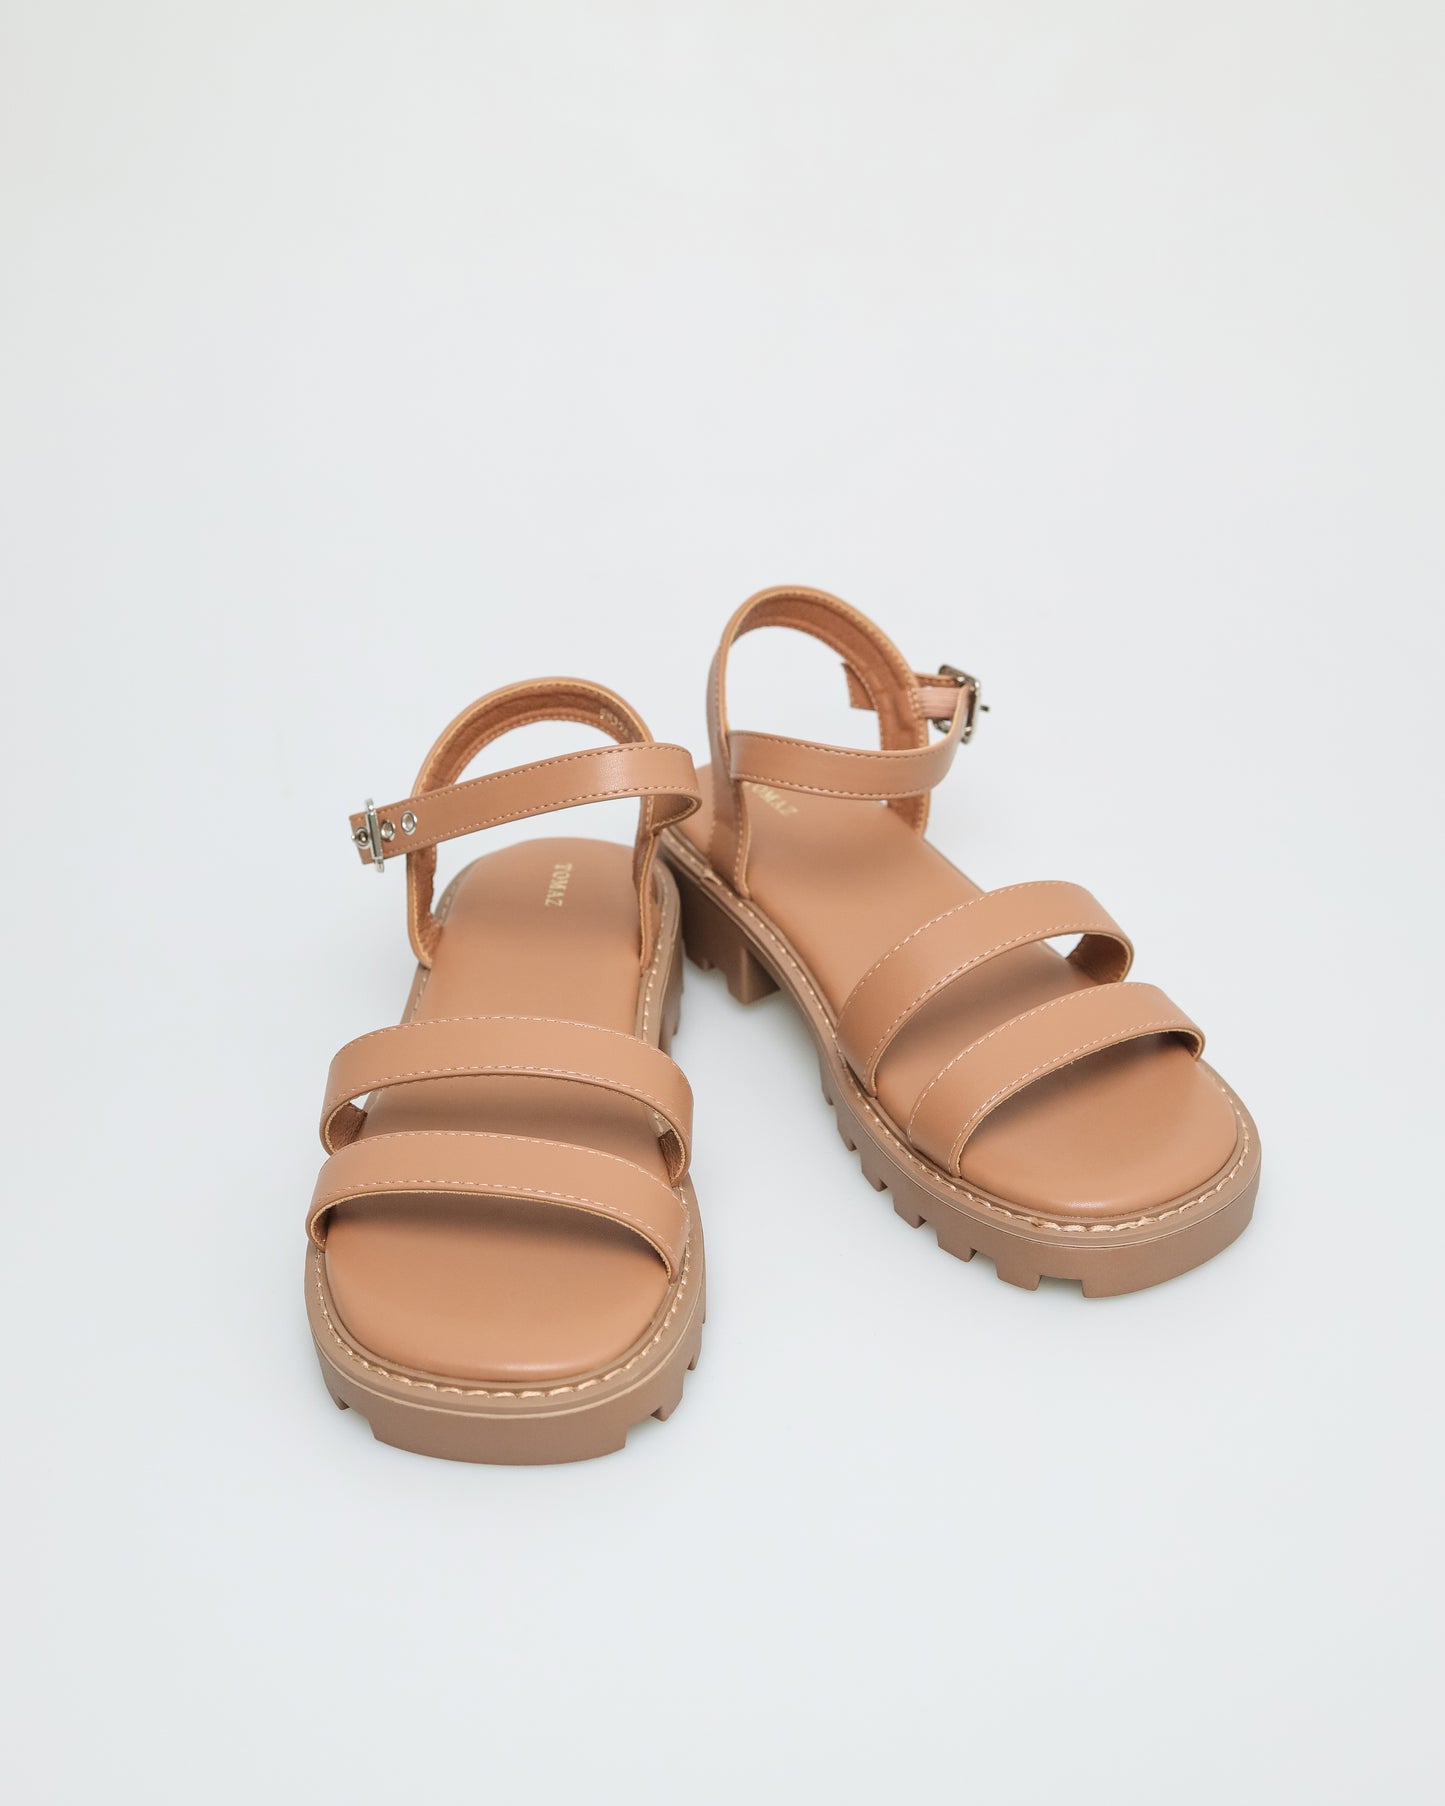 Tomaz NN224 Ladies Double Ankle Strap Sandals (Camel)